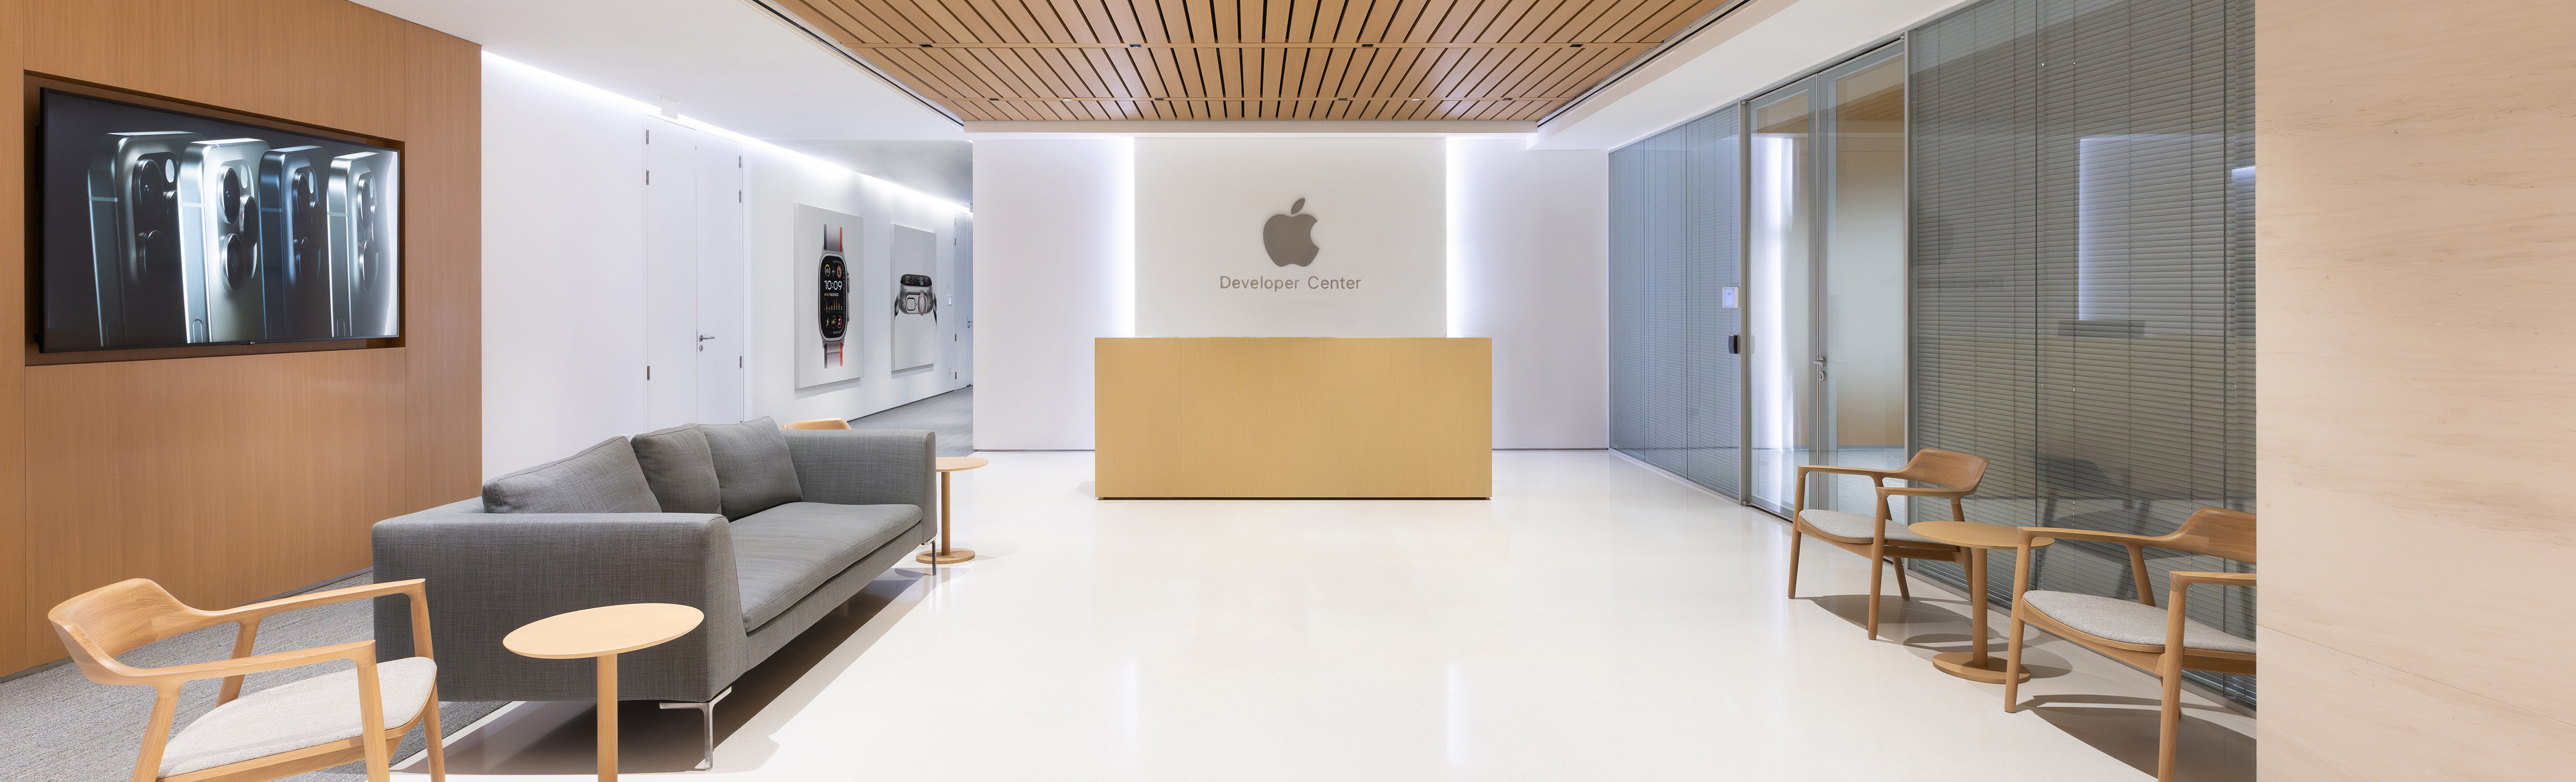 Apple Developer Center의 내부 모습. 밝고 넓은 방에 회색 소파와 여러 개의 목재 의자가 있으며, 대형 Apple 로고 아래에는 안내 데스크가 있습니다.